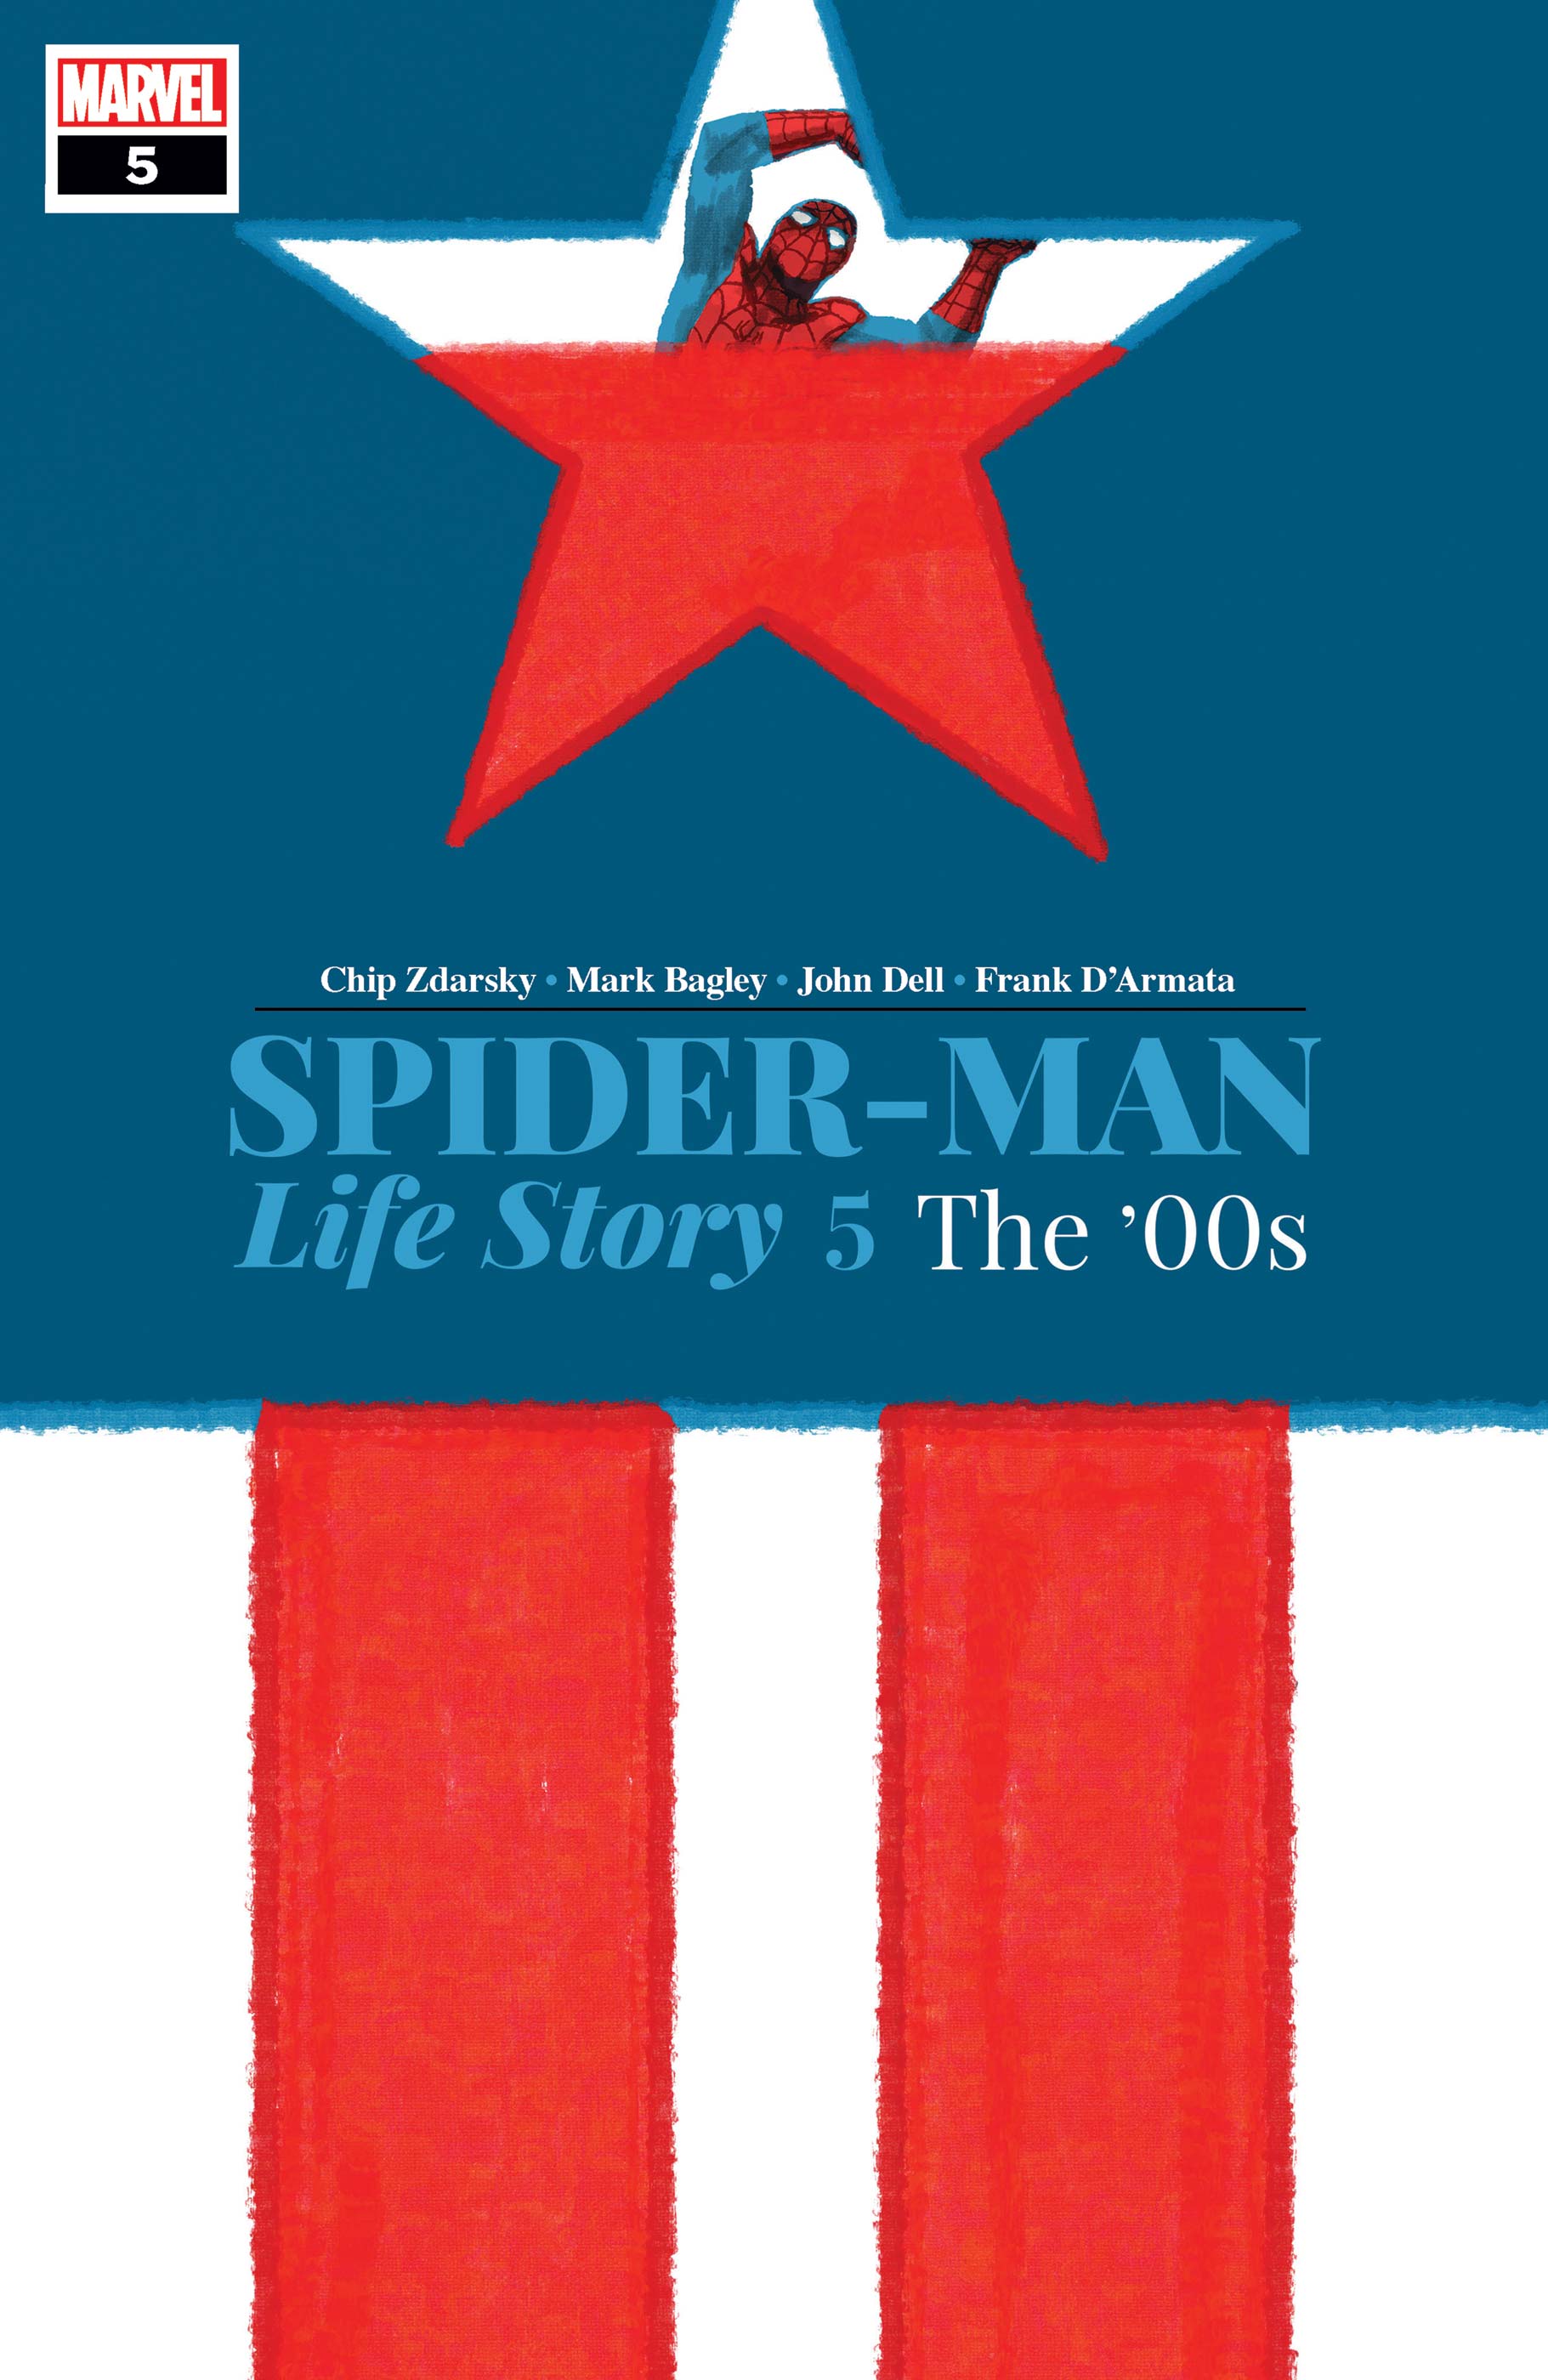 Spider-Man: Life Story (2019) #5